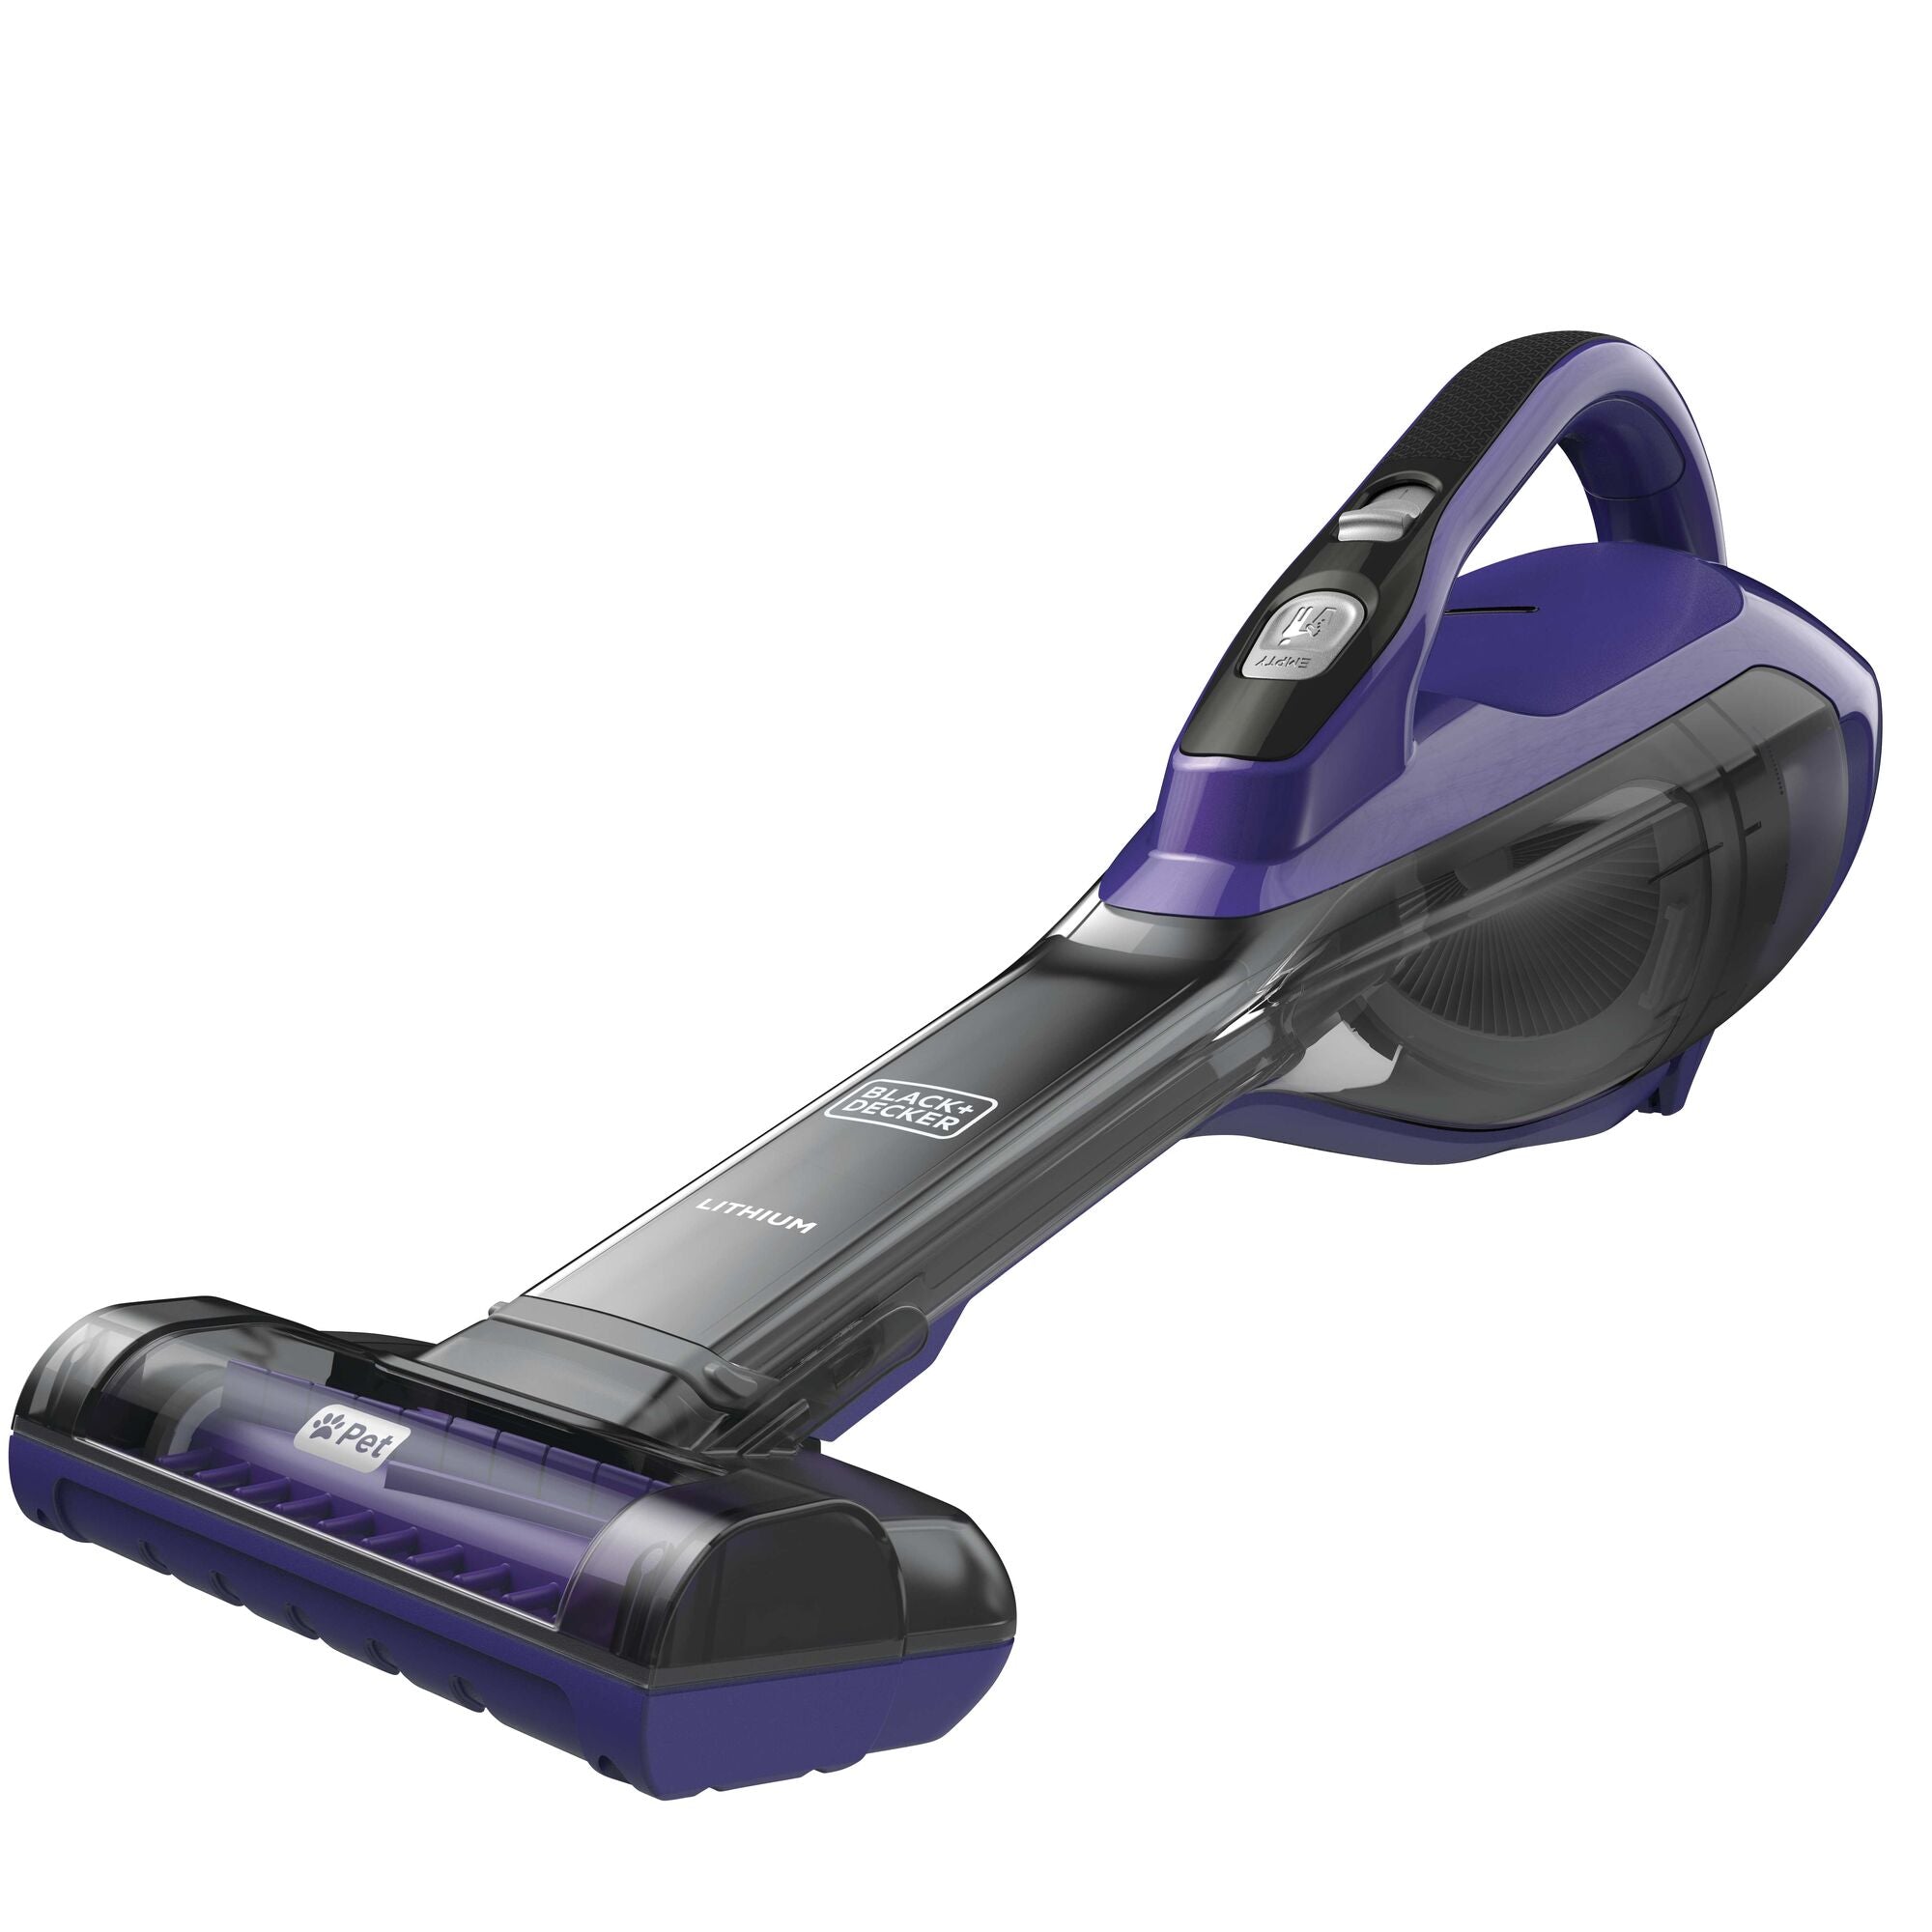 dustbuster® AdvancedClean™ Pet Cordless Handheld Vacuum | BLACK+DECKER